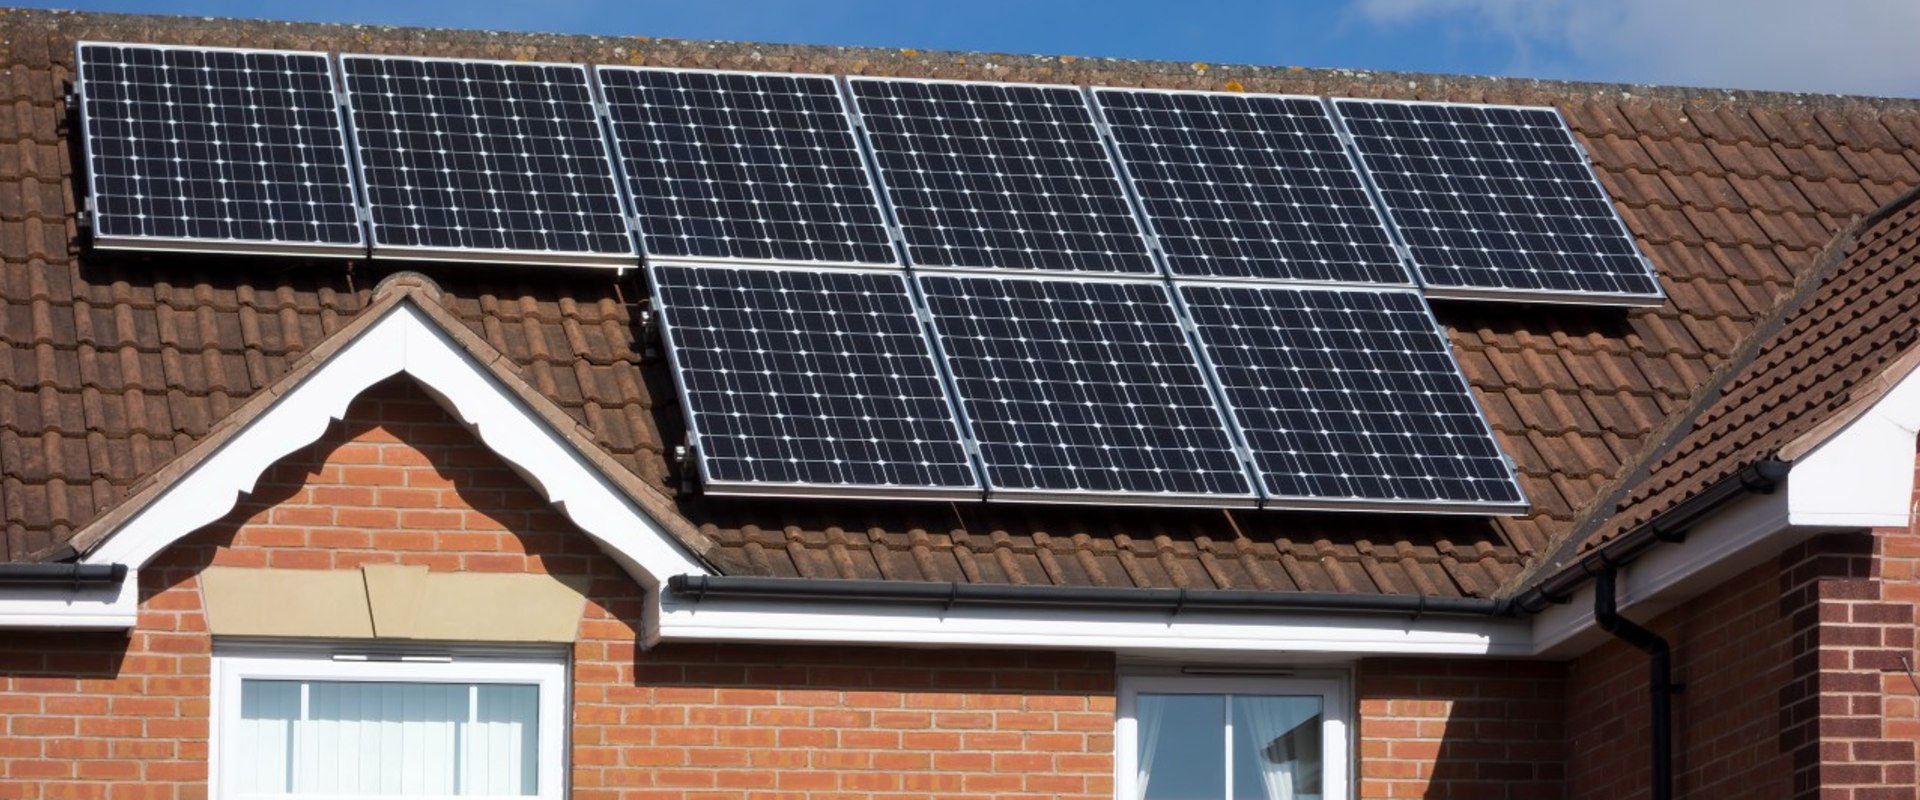 Are solar power worth it?